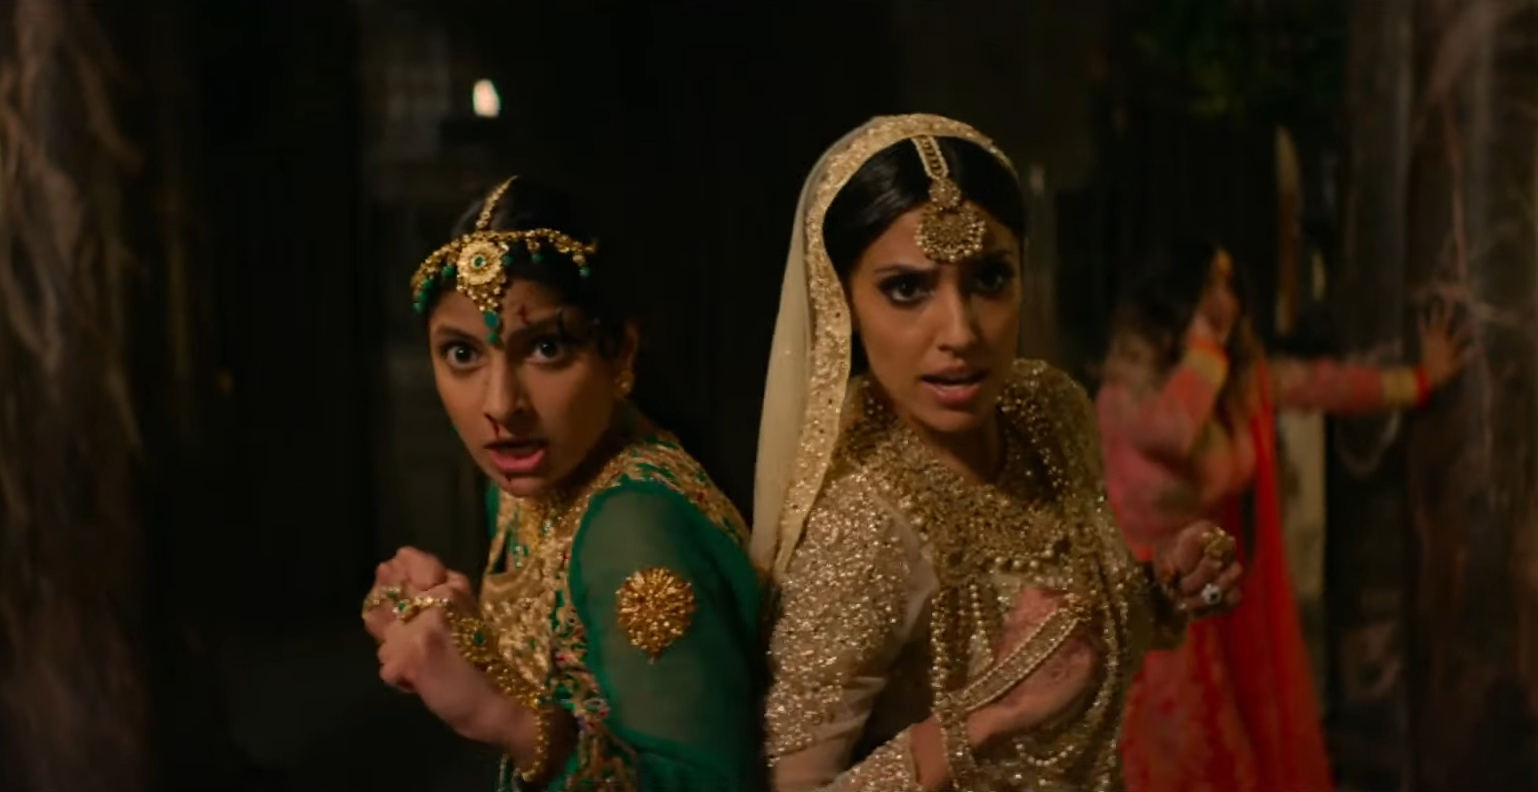 Priya Kansara and Ritu Arya from the official trailer for Polite Society